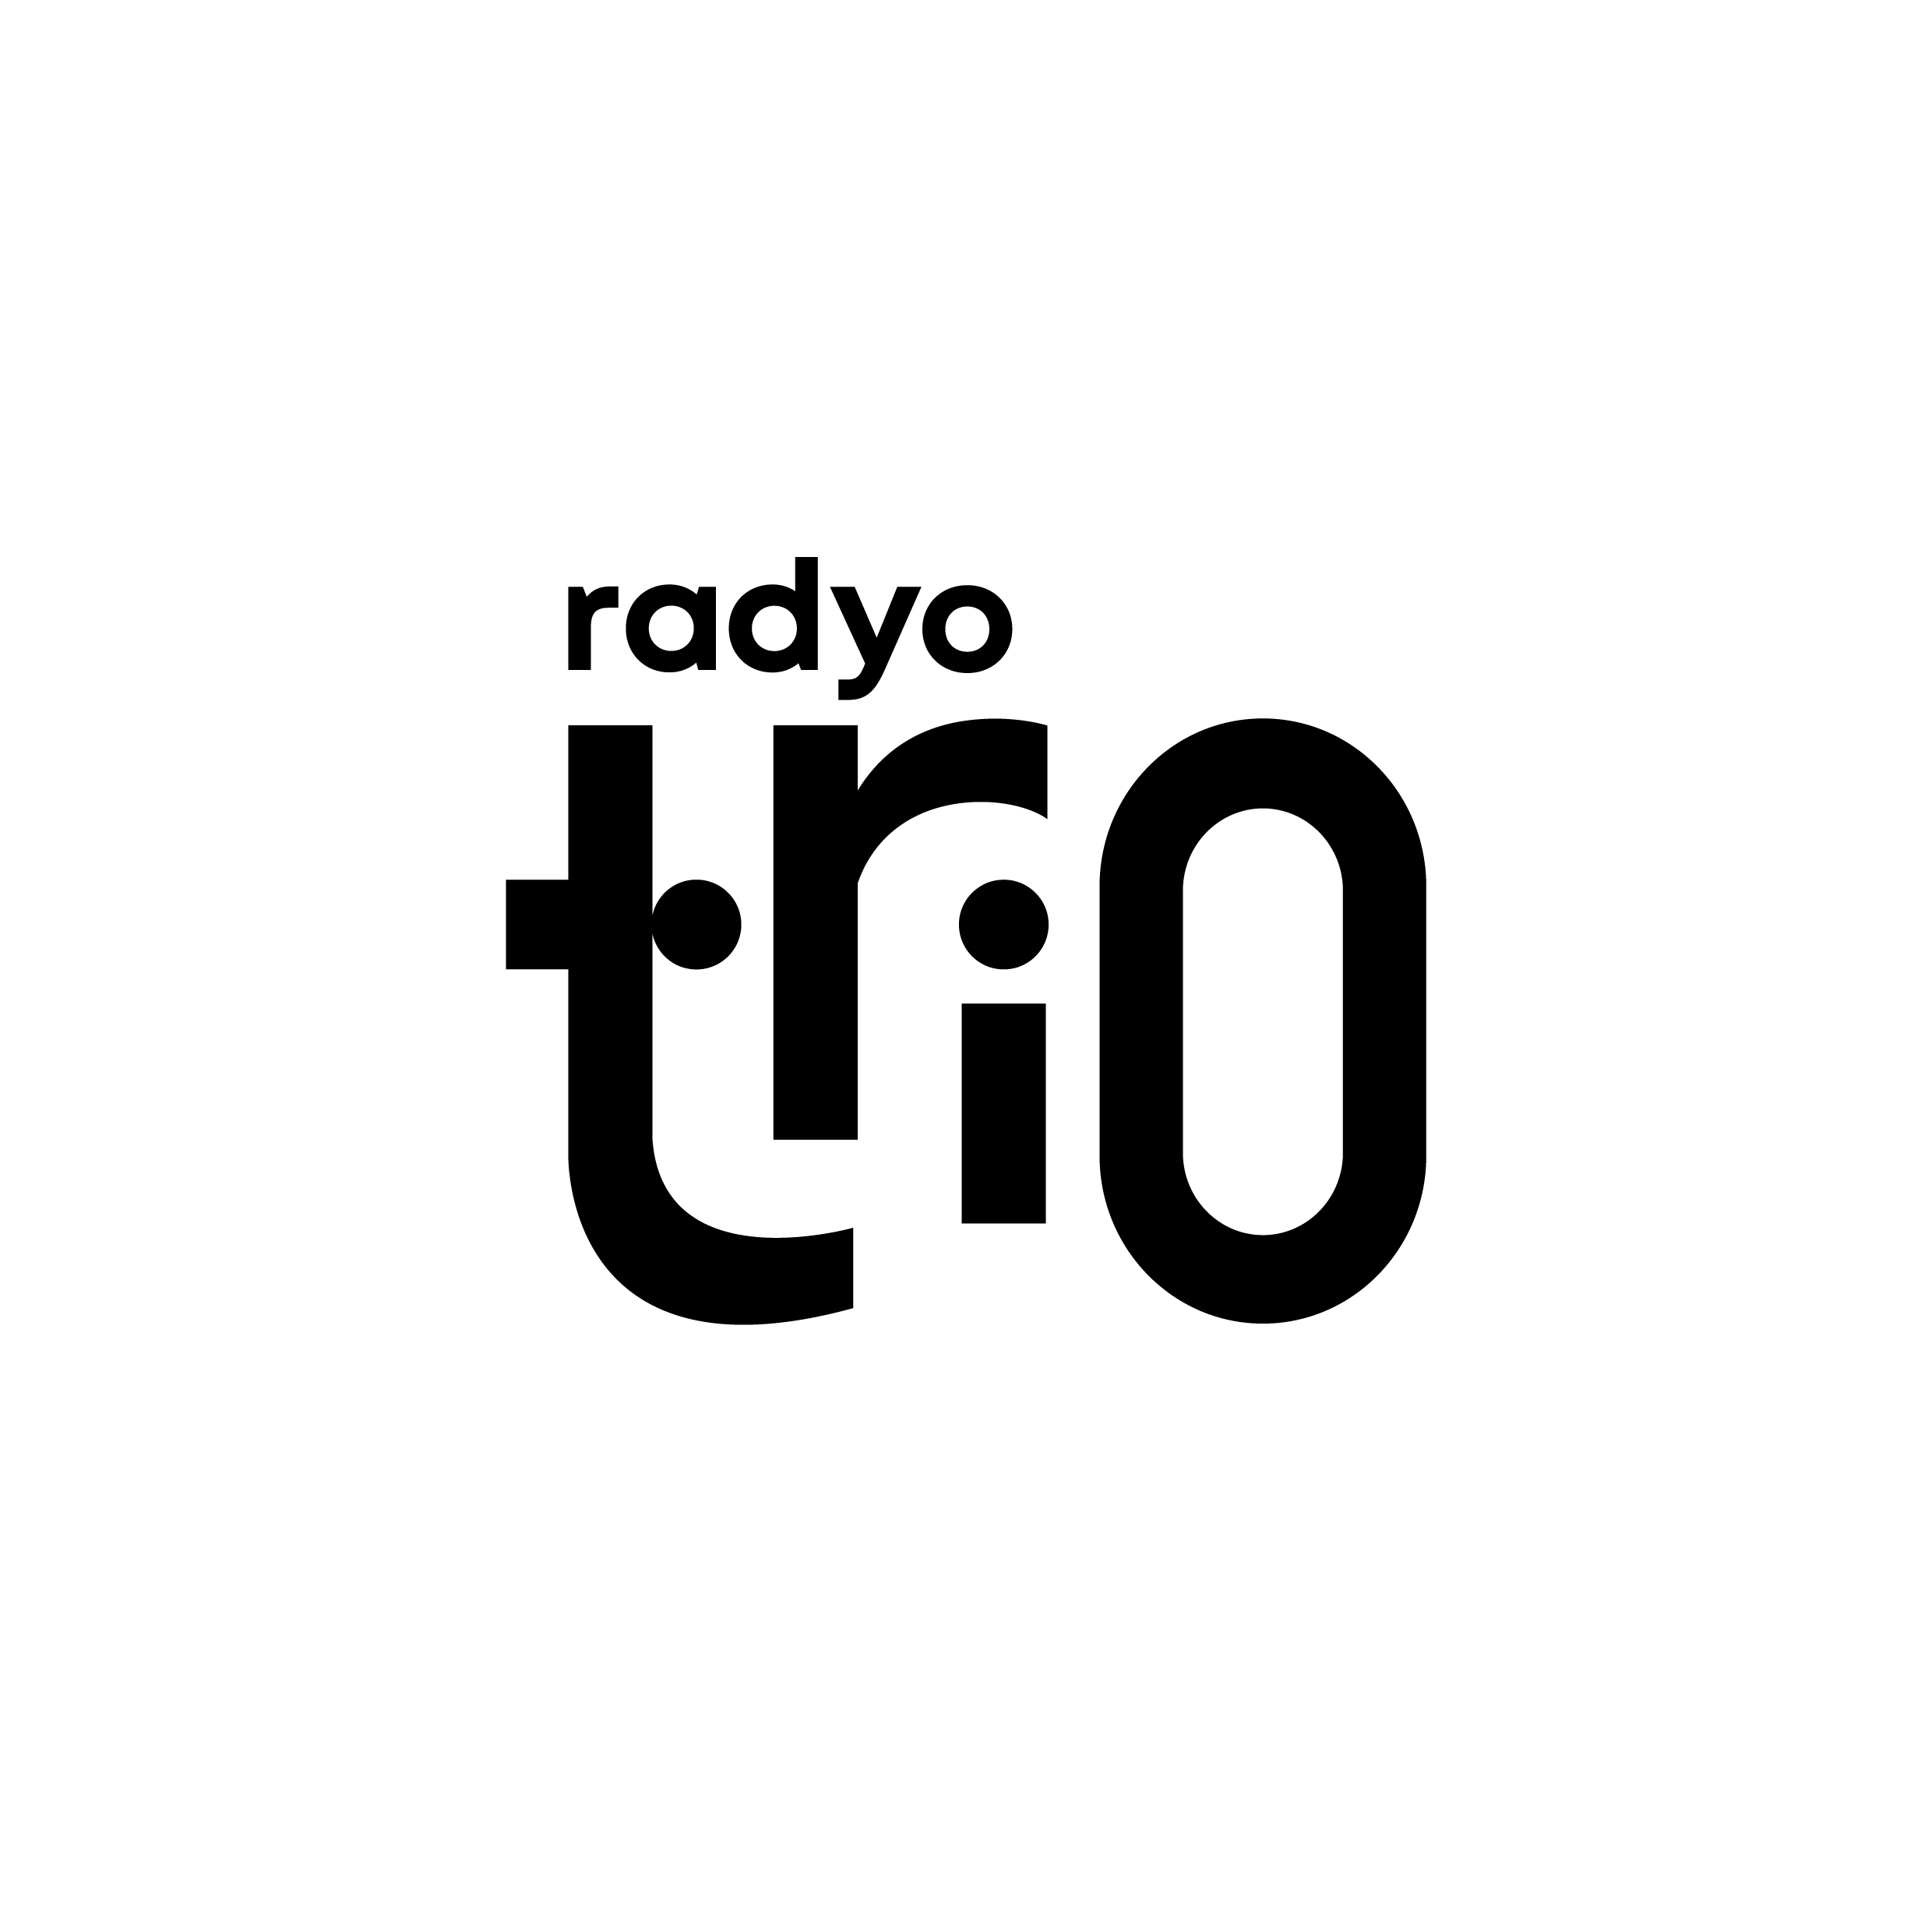 radyo_trio_logo-01